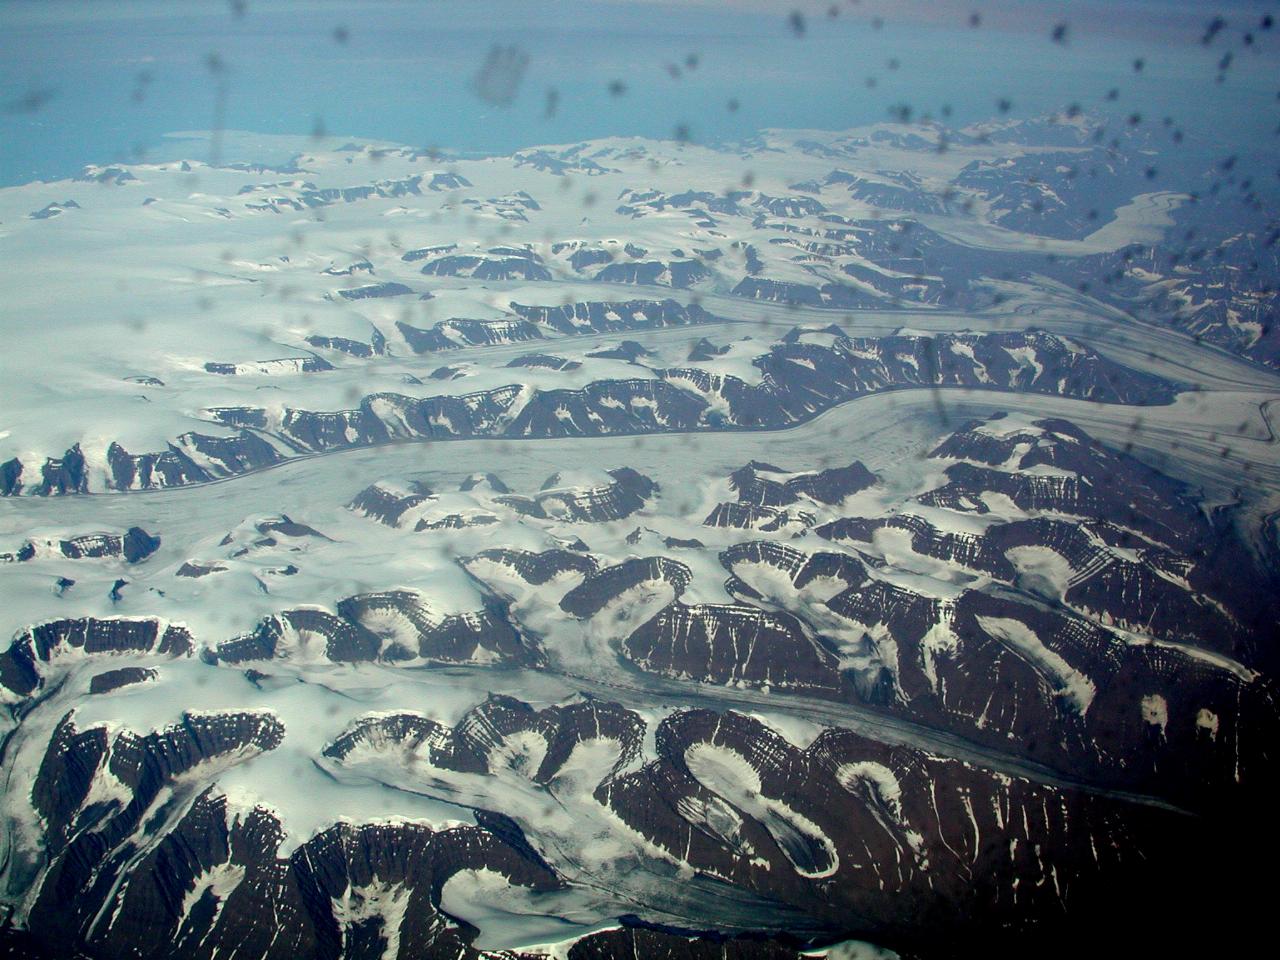 KPLU Viking Jazz: Greenland and several of its many glaciers